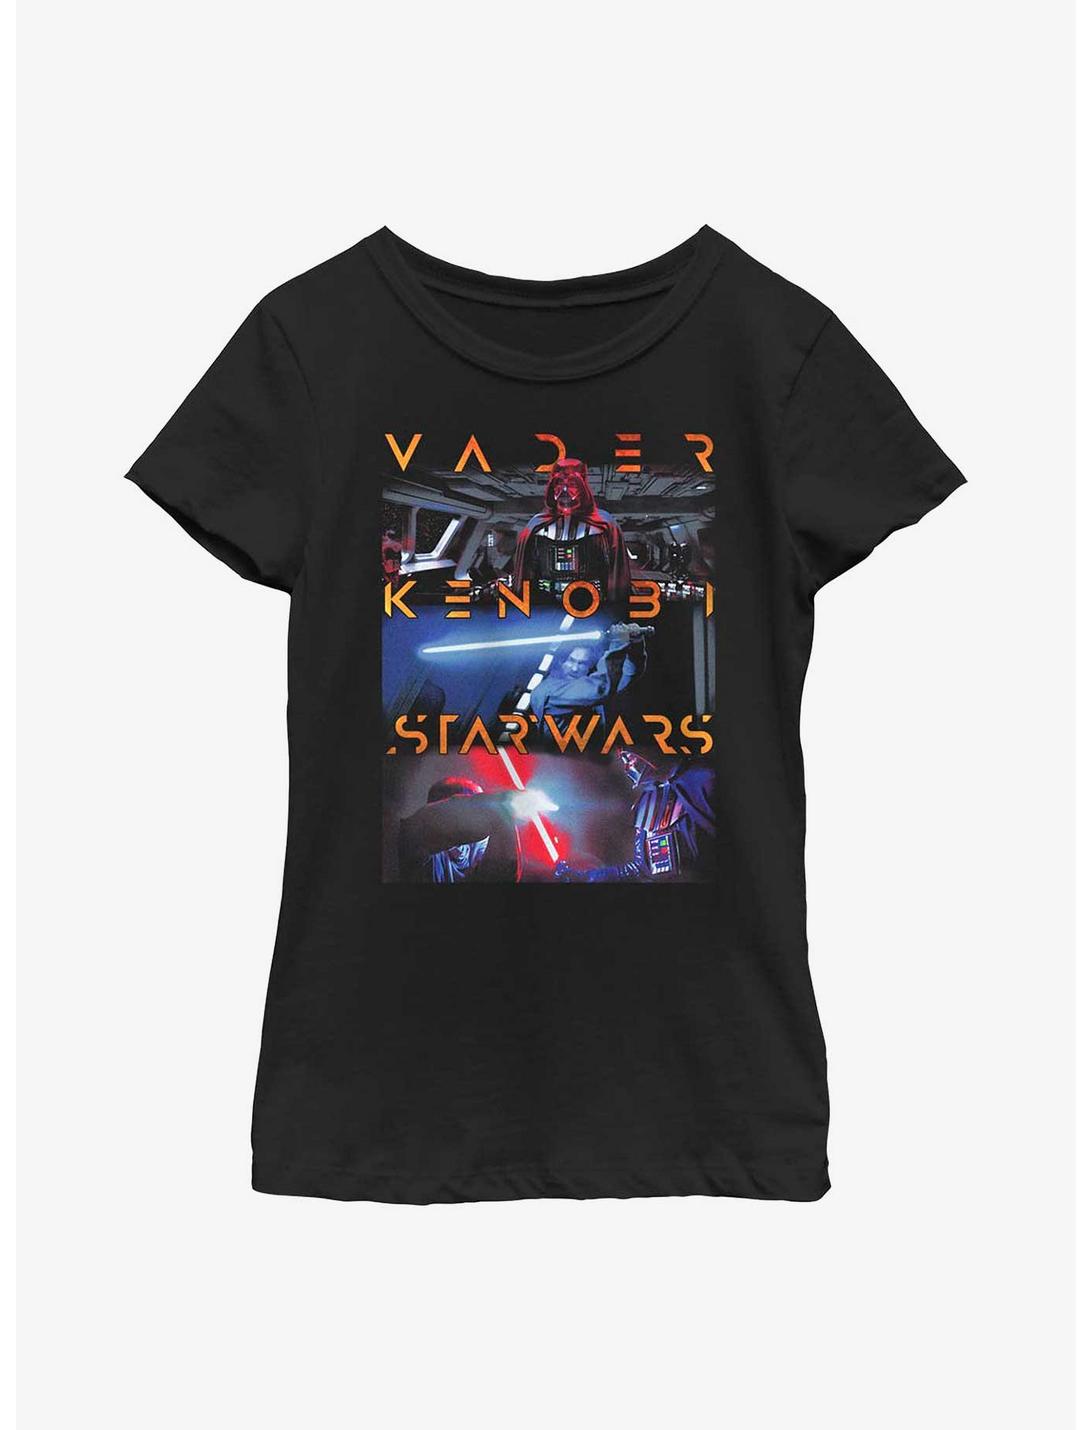 Star Wars Obi-Wan Kenobi Vader Duel Youth Girls T-Shirt, BLACK, hi-res